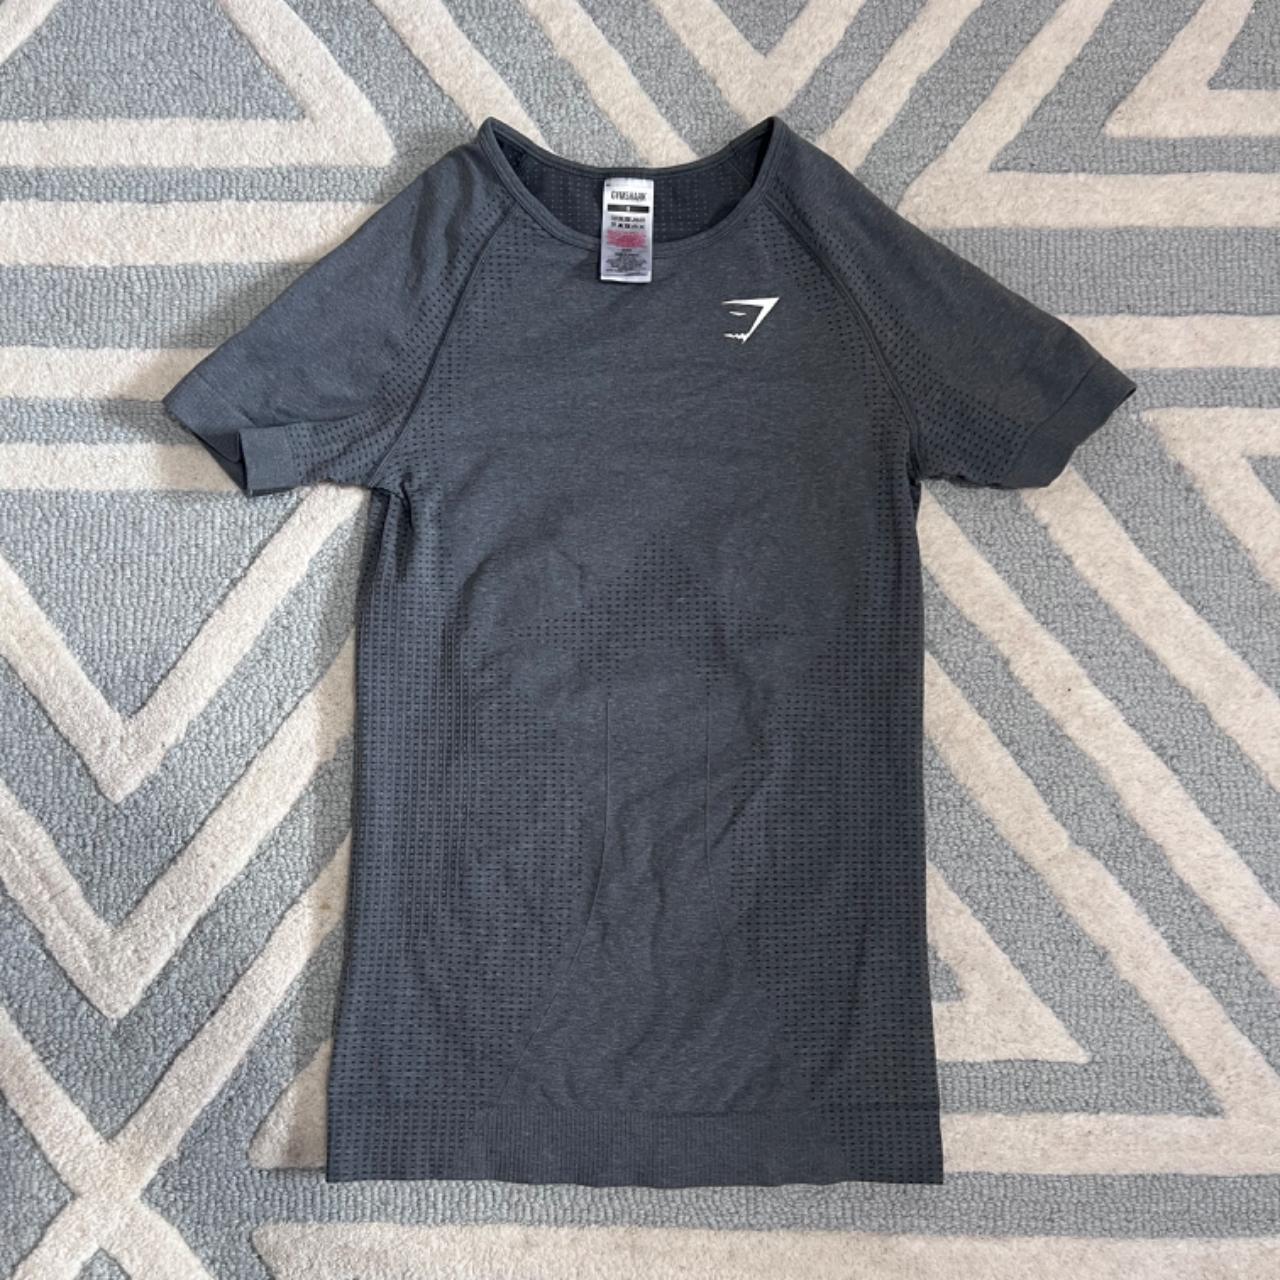 Vital Seamless 2.0 T-Shirt